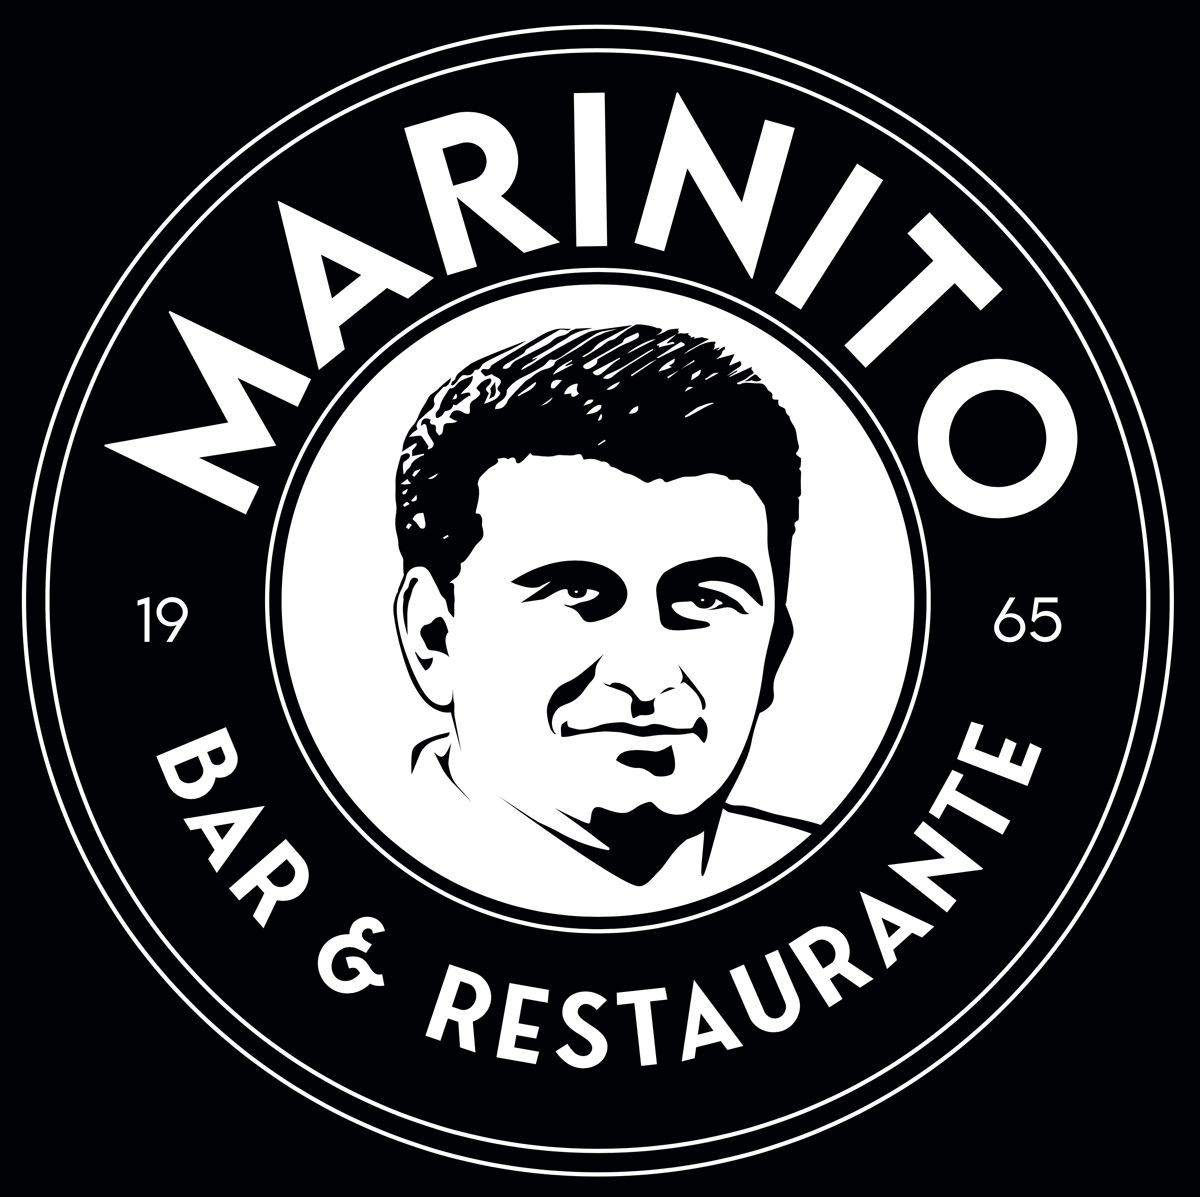 Logo del restaurante Marinito, versión oscura